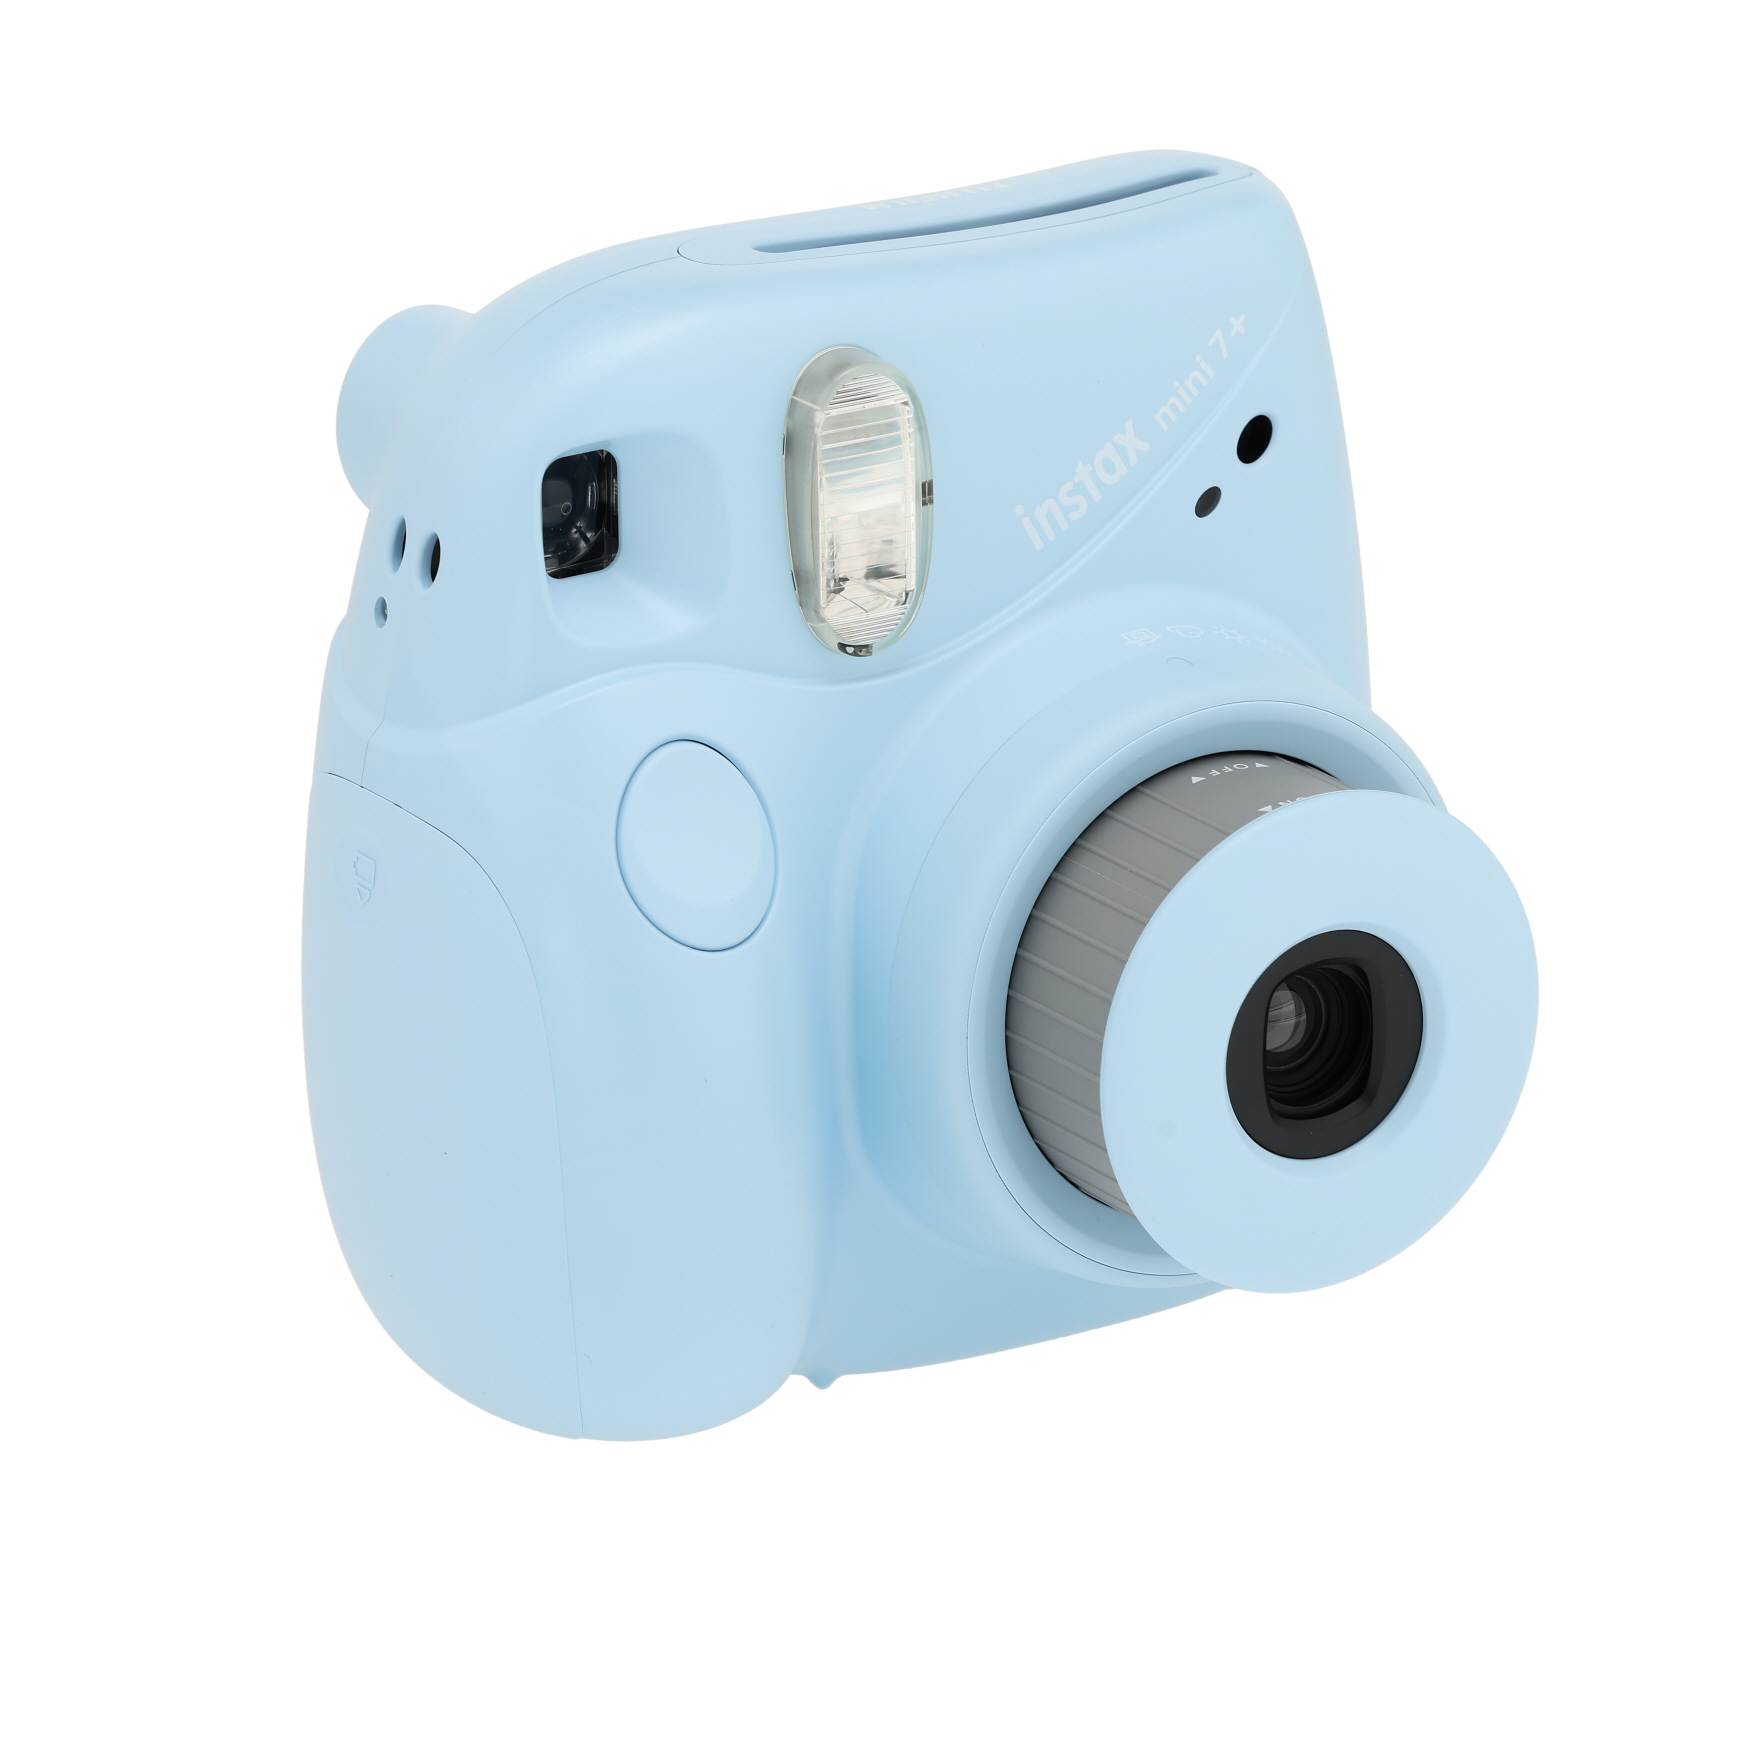 Fujifilm INSTAX Mini 7+ Bundle (10-Pack Film, Album, Camera Case,  Stickers), Light Blue, Brand New Condition 